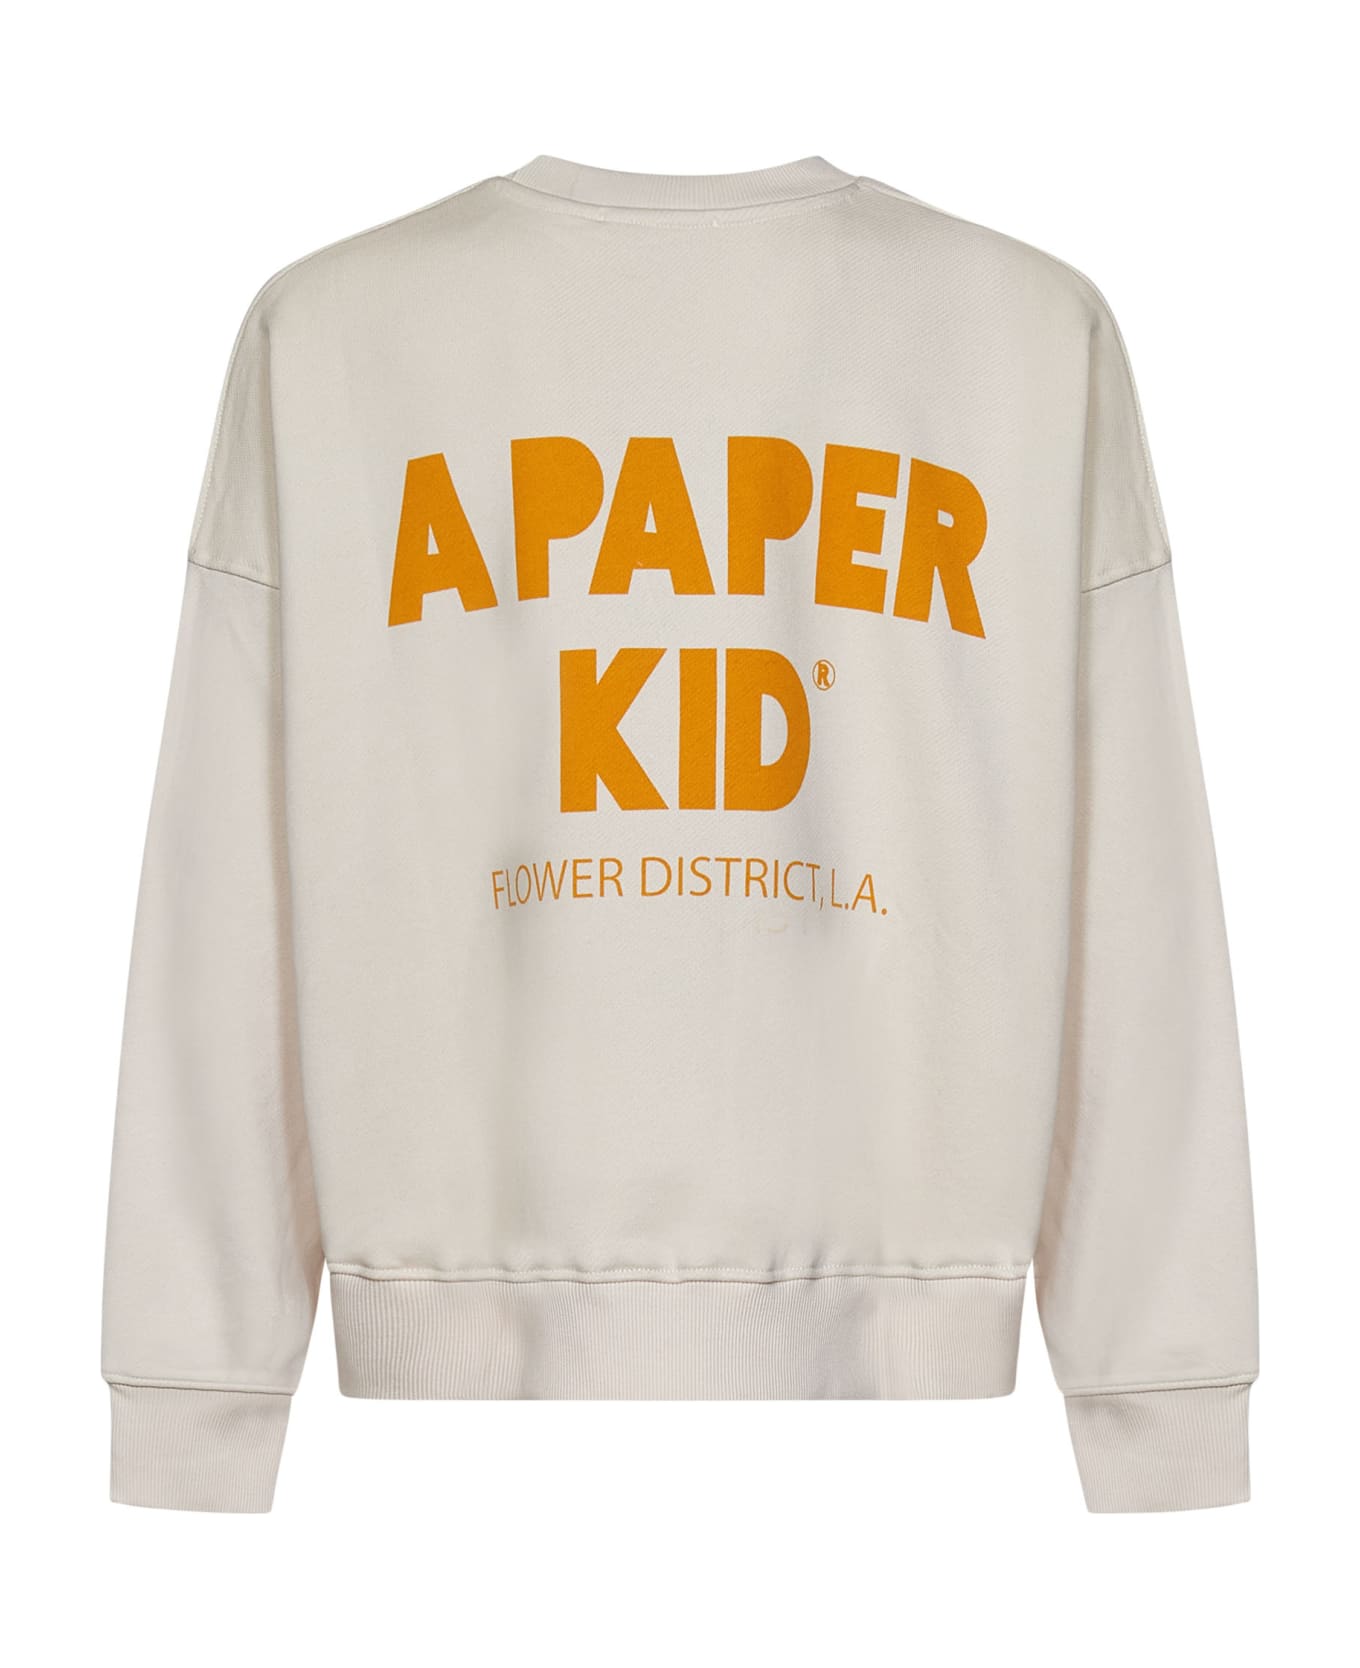 A Paper Kid Sweatshirt - Crema フリース